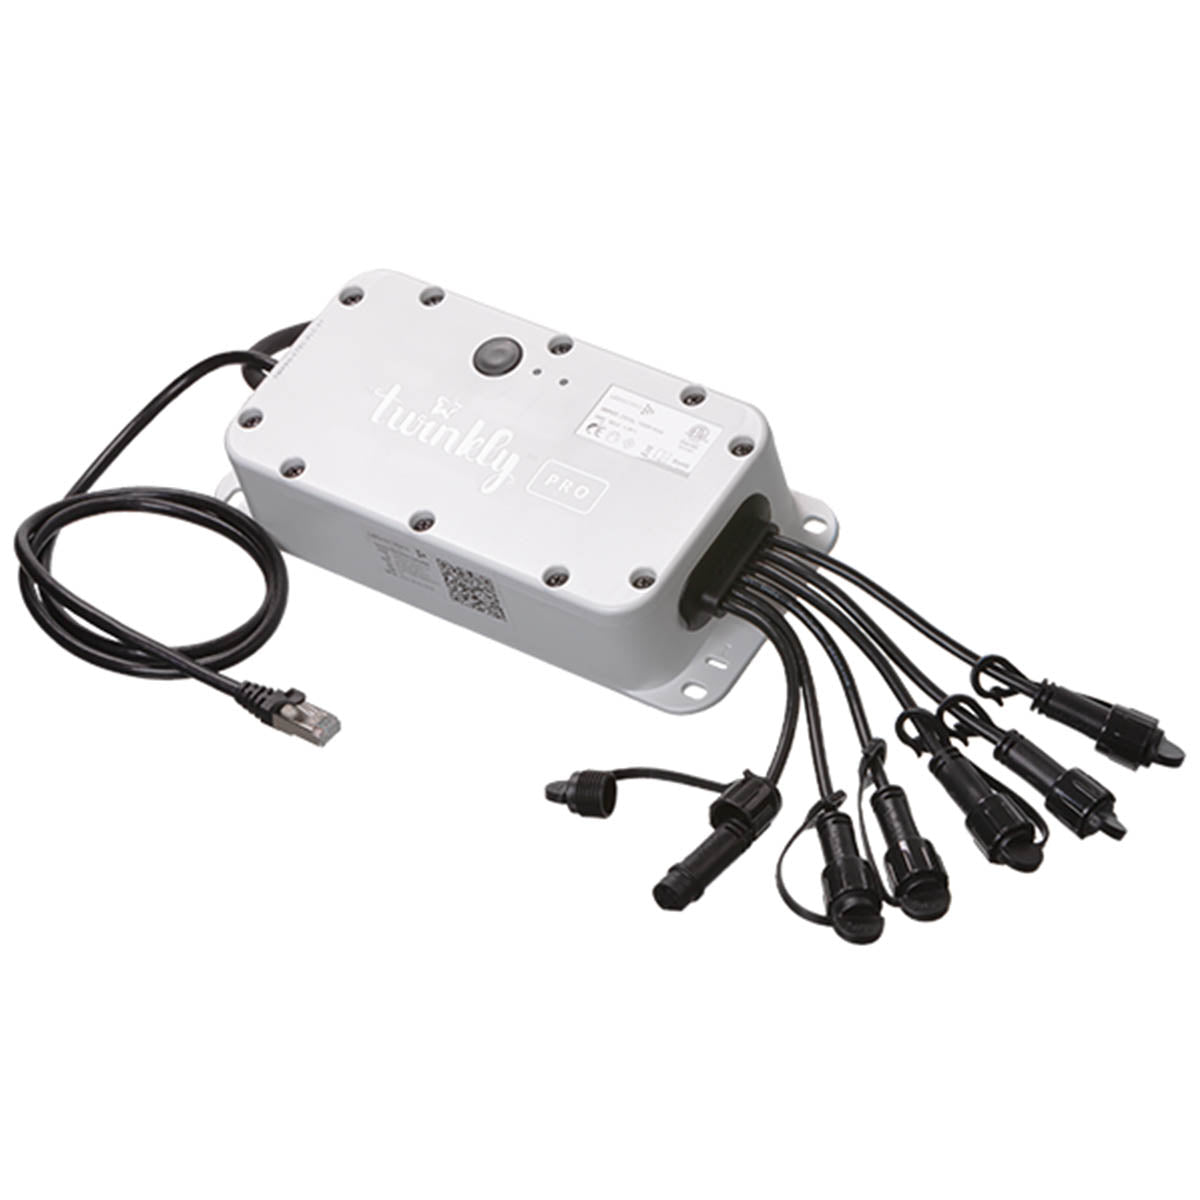 Twinkly Pro 6 Port Controller via Ethernet Connection, 120-240V AC Input, 24V DC Output - Bees Lighting